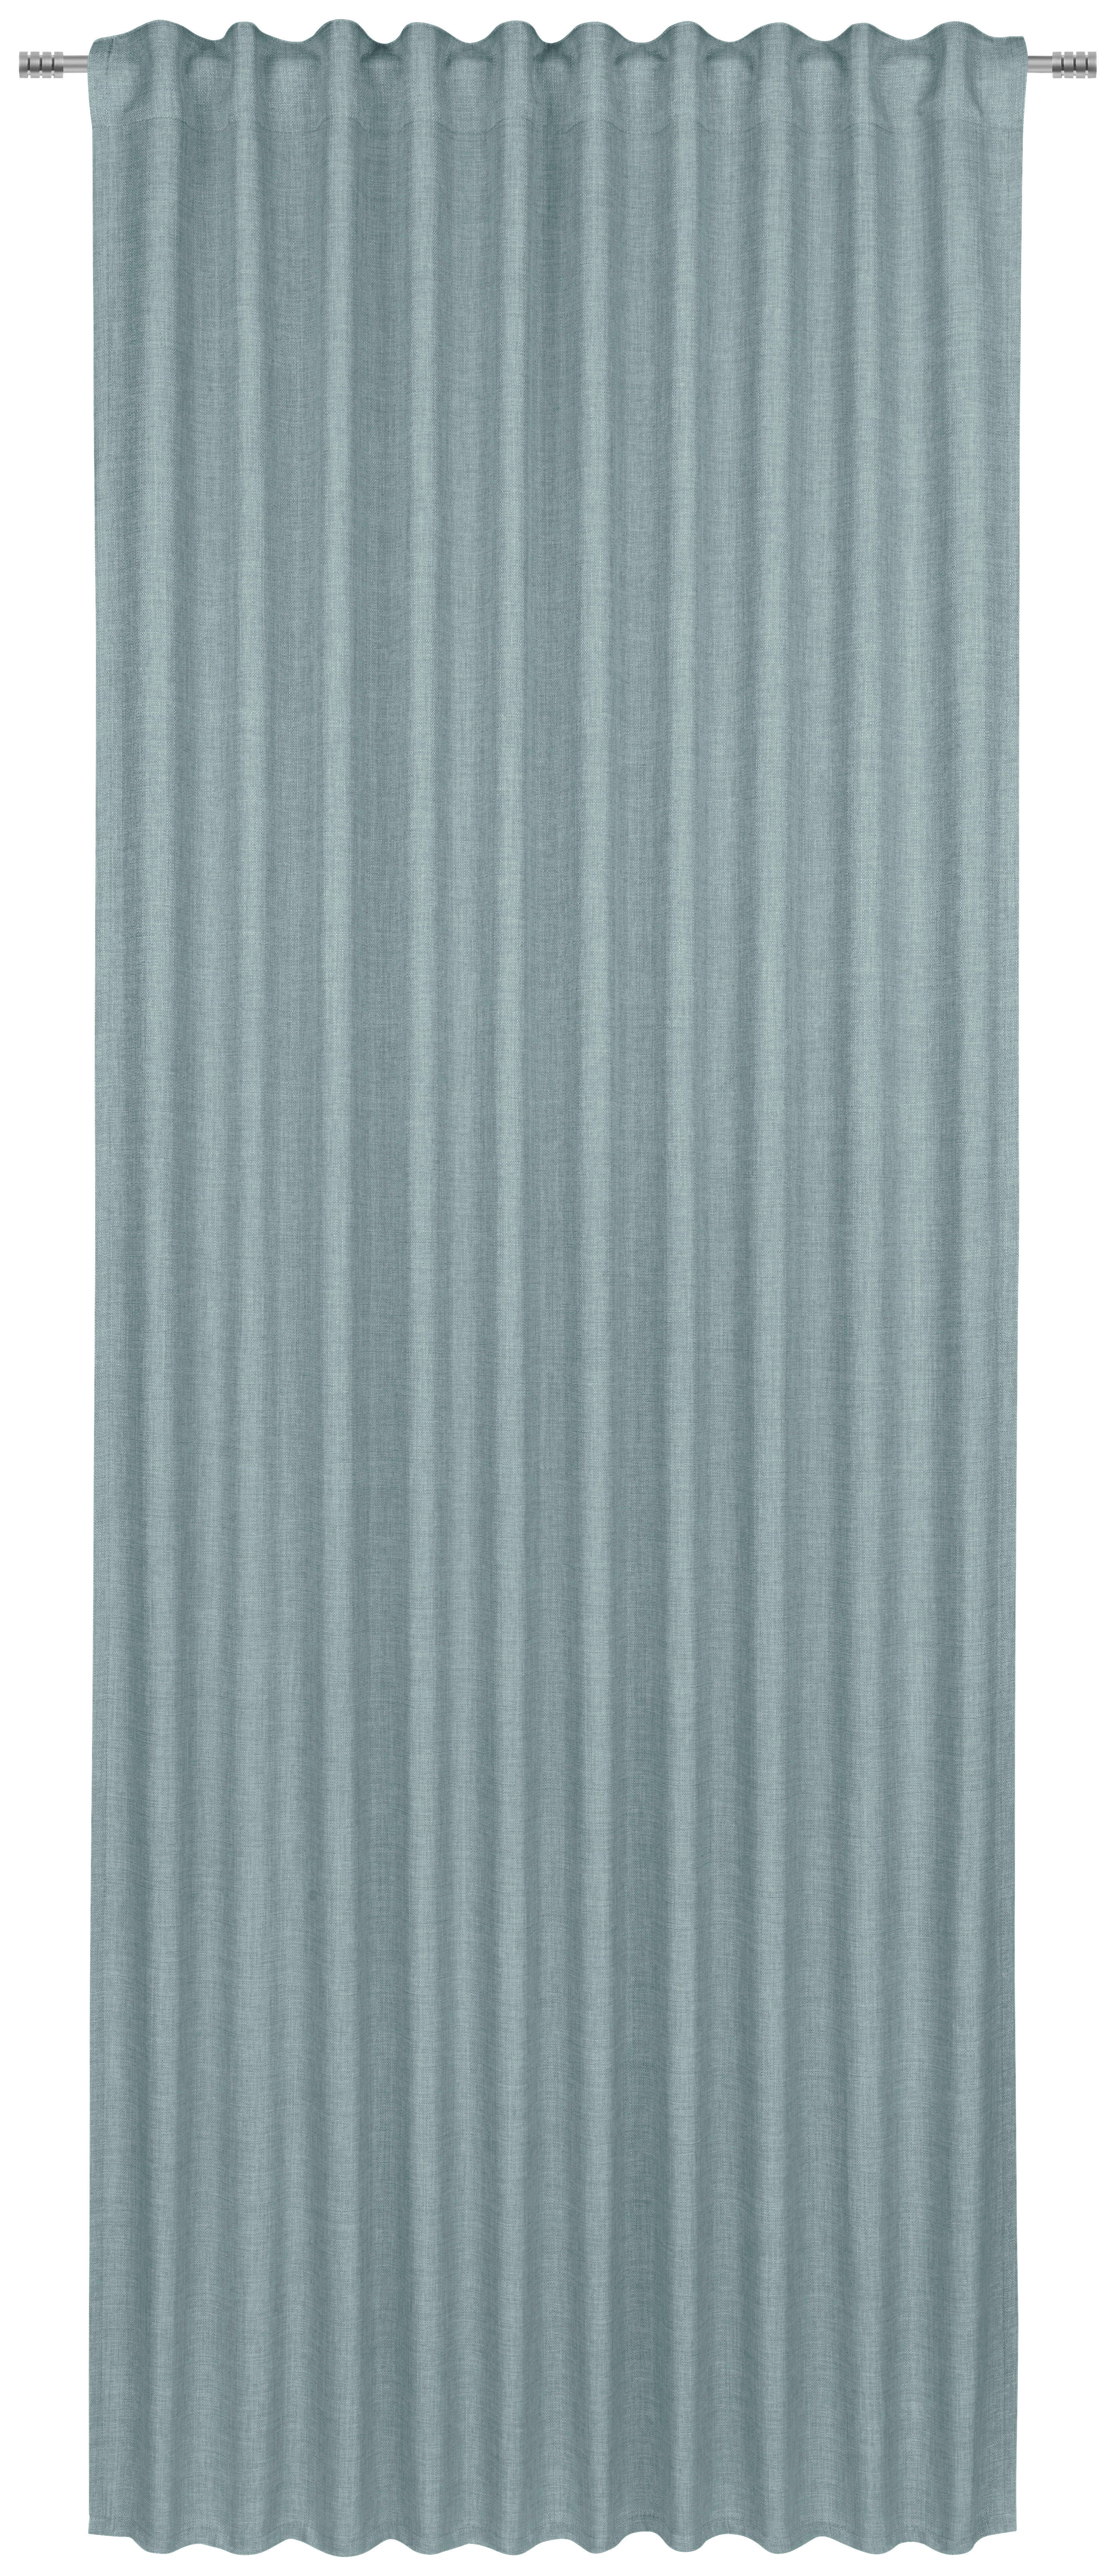 FERTIGVORHANG FREDDY blickdicht 140/245 cm   - Graublau, Basics, Textil (140/245cm) - Boxxx